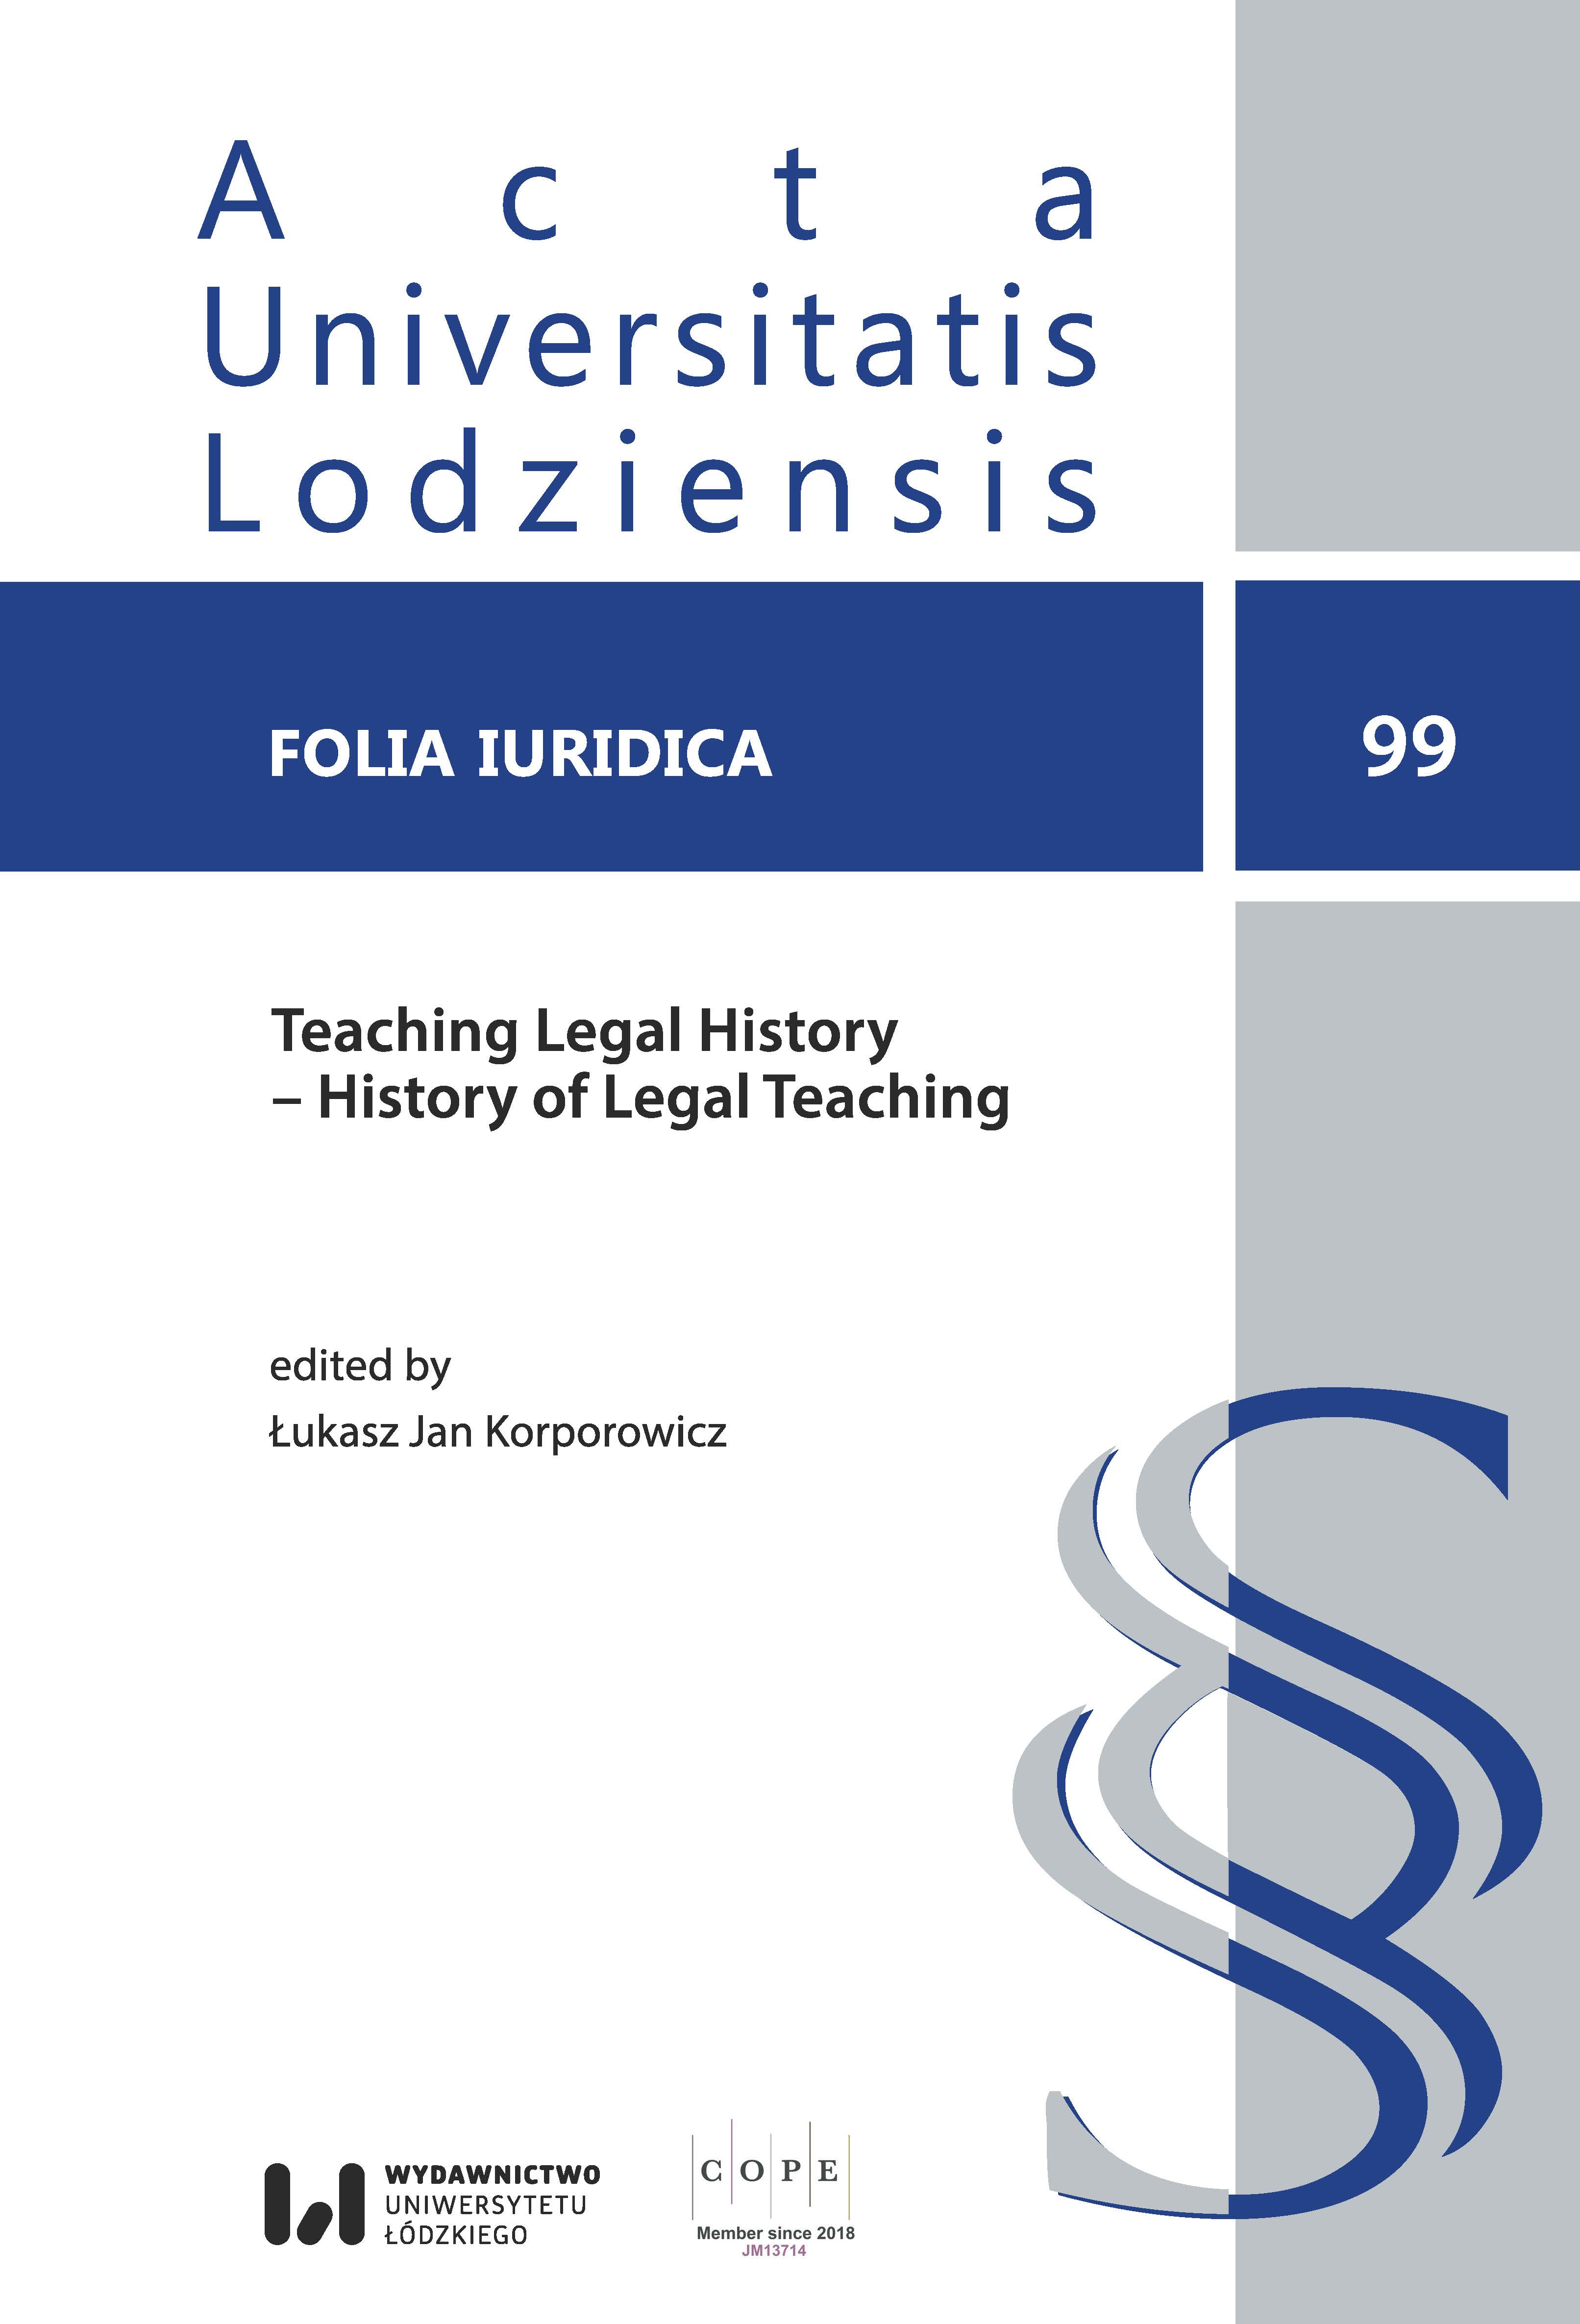 Australian Legal Education – A Short History